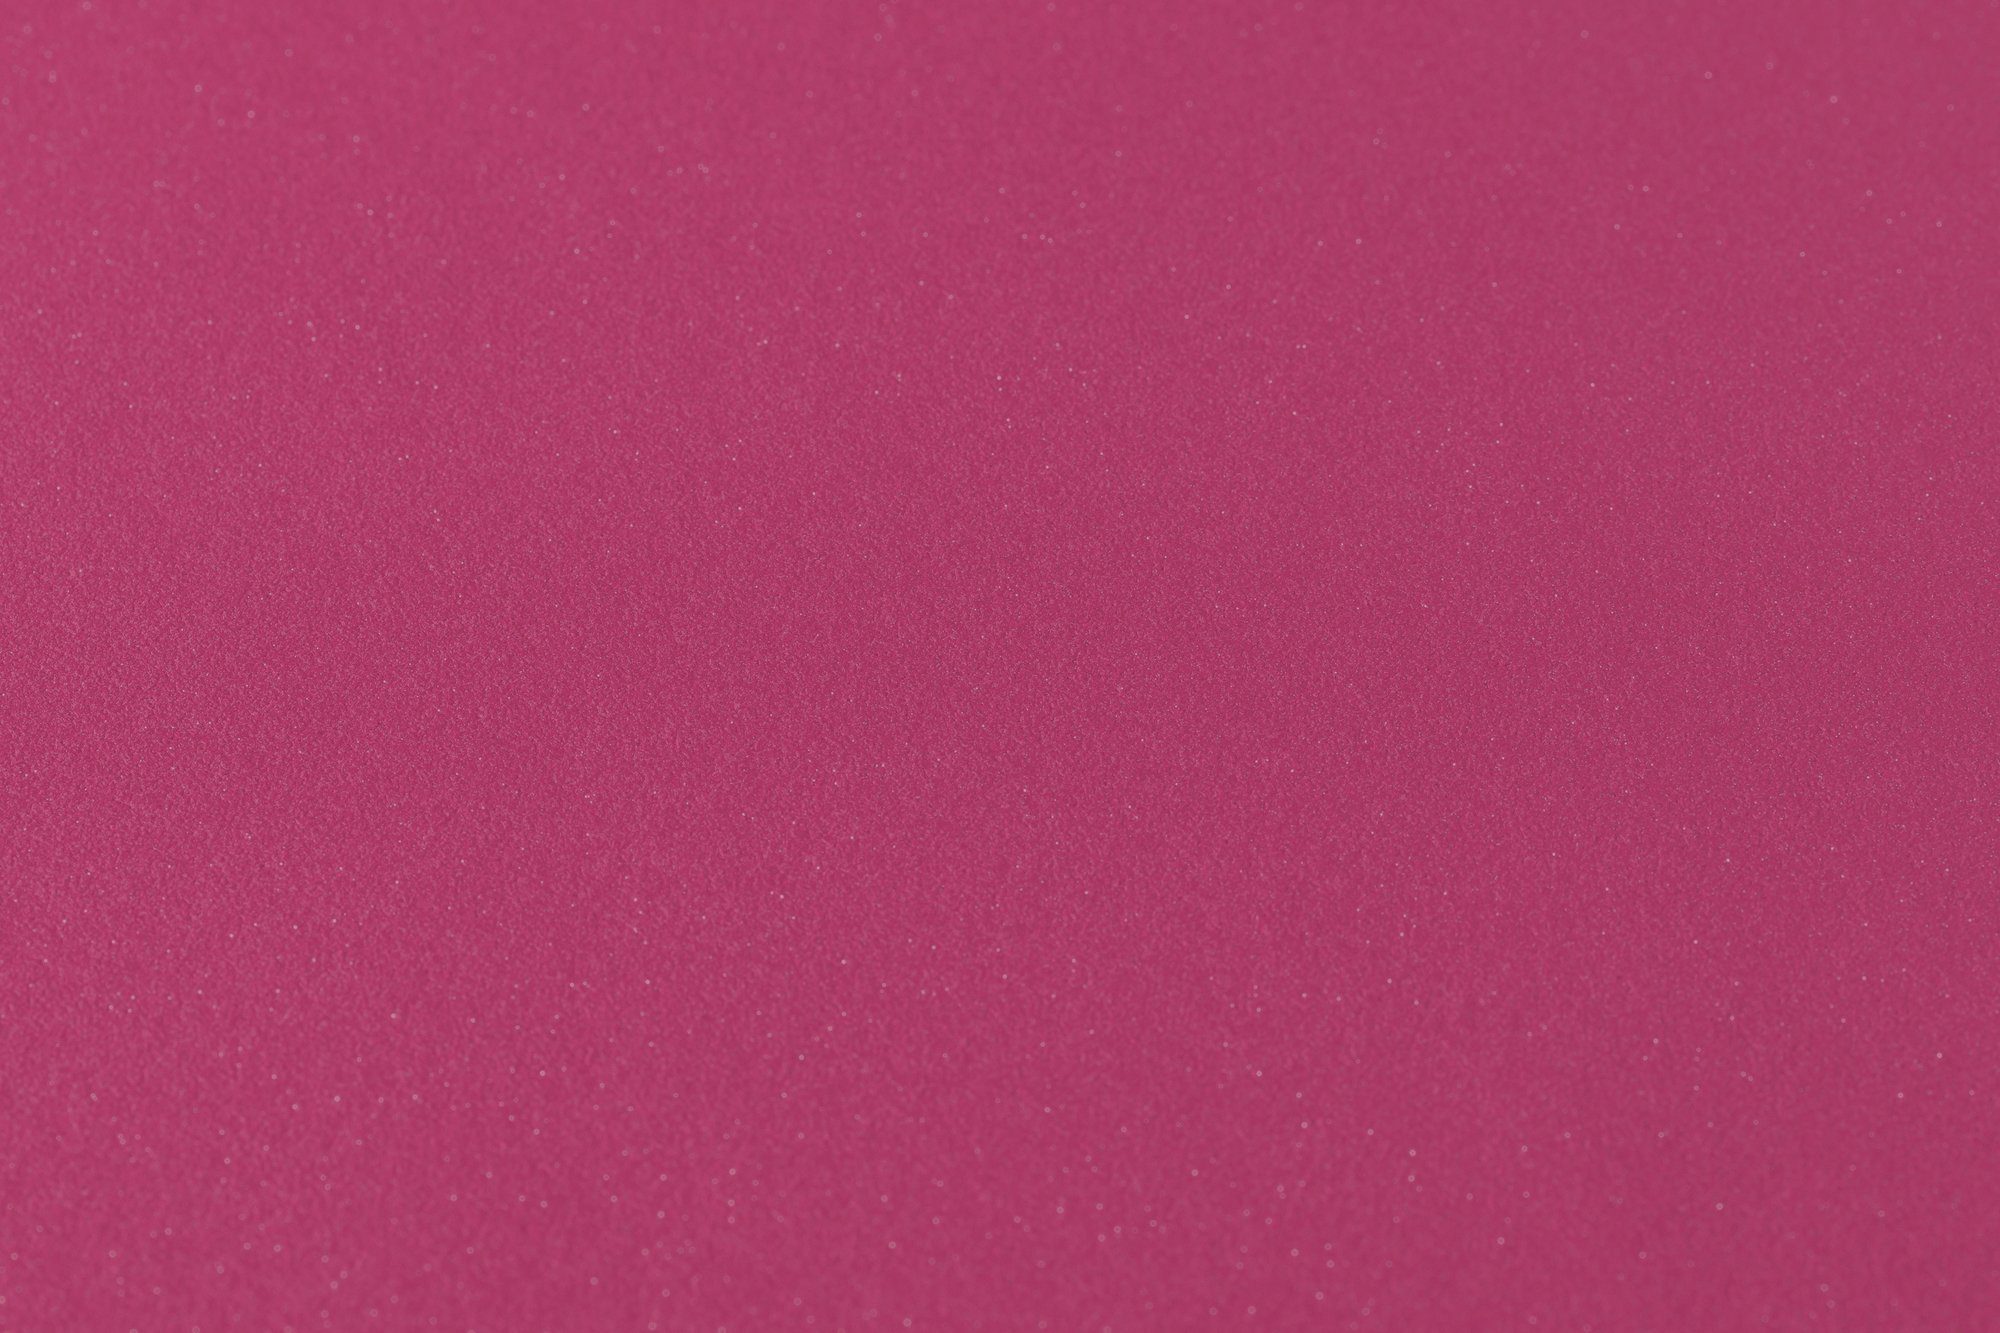 Uni, Tapete Création Trendwall rosa/violett uni, A.S. Unitapete Einfarbig strukturiert, Vliestapete